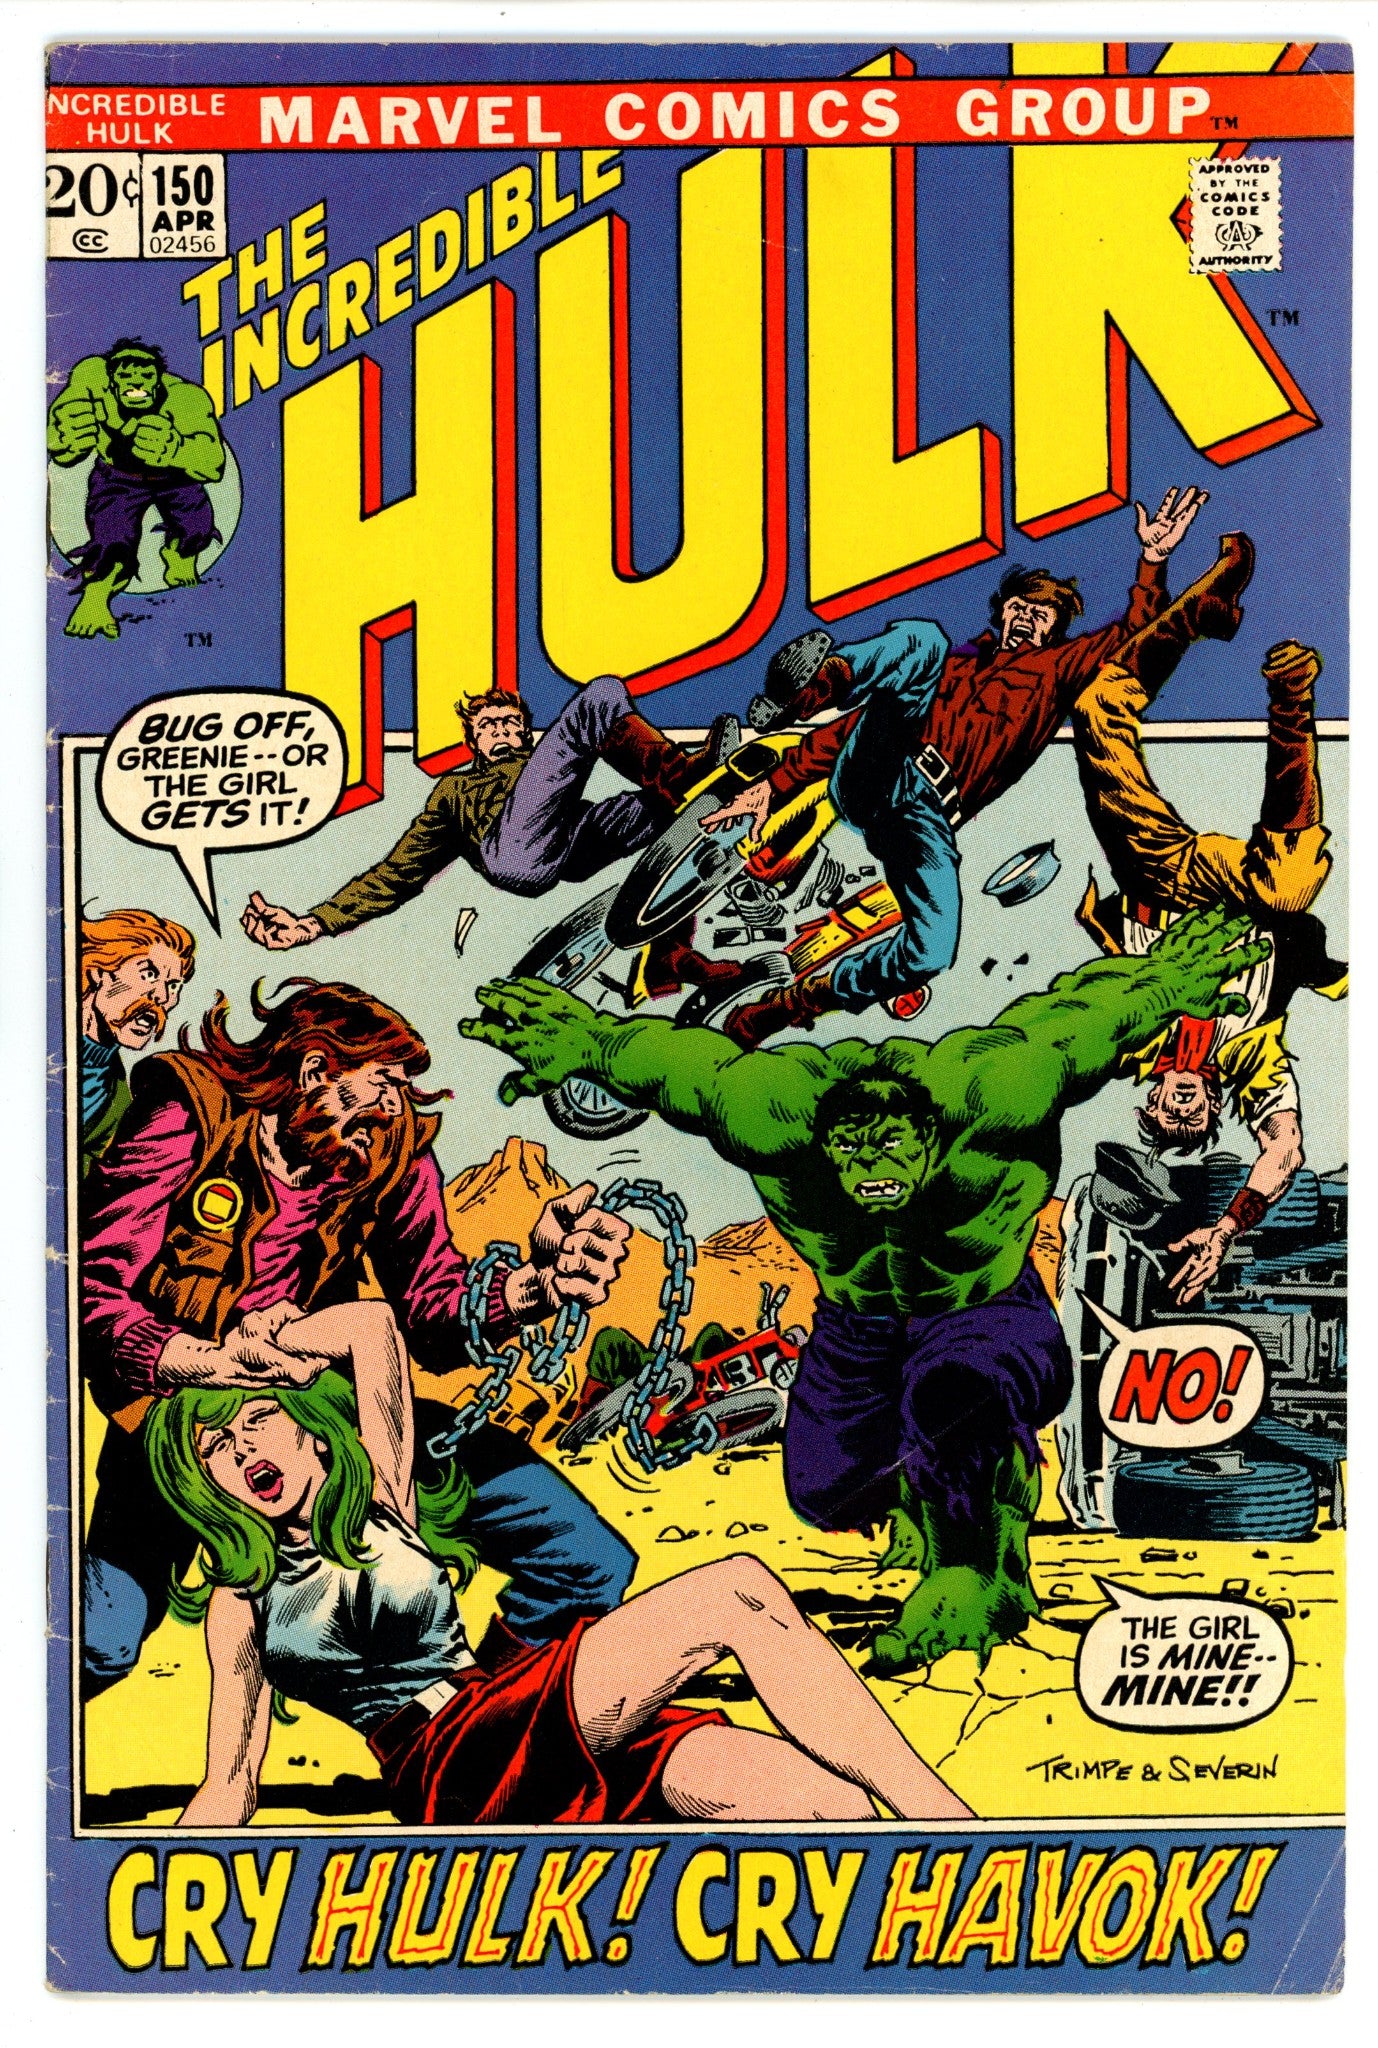 The Incredible Hulk Vol 1 150VG+ (4.5)(1972)